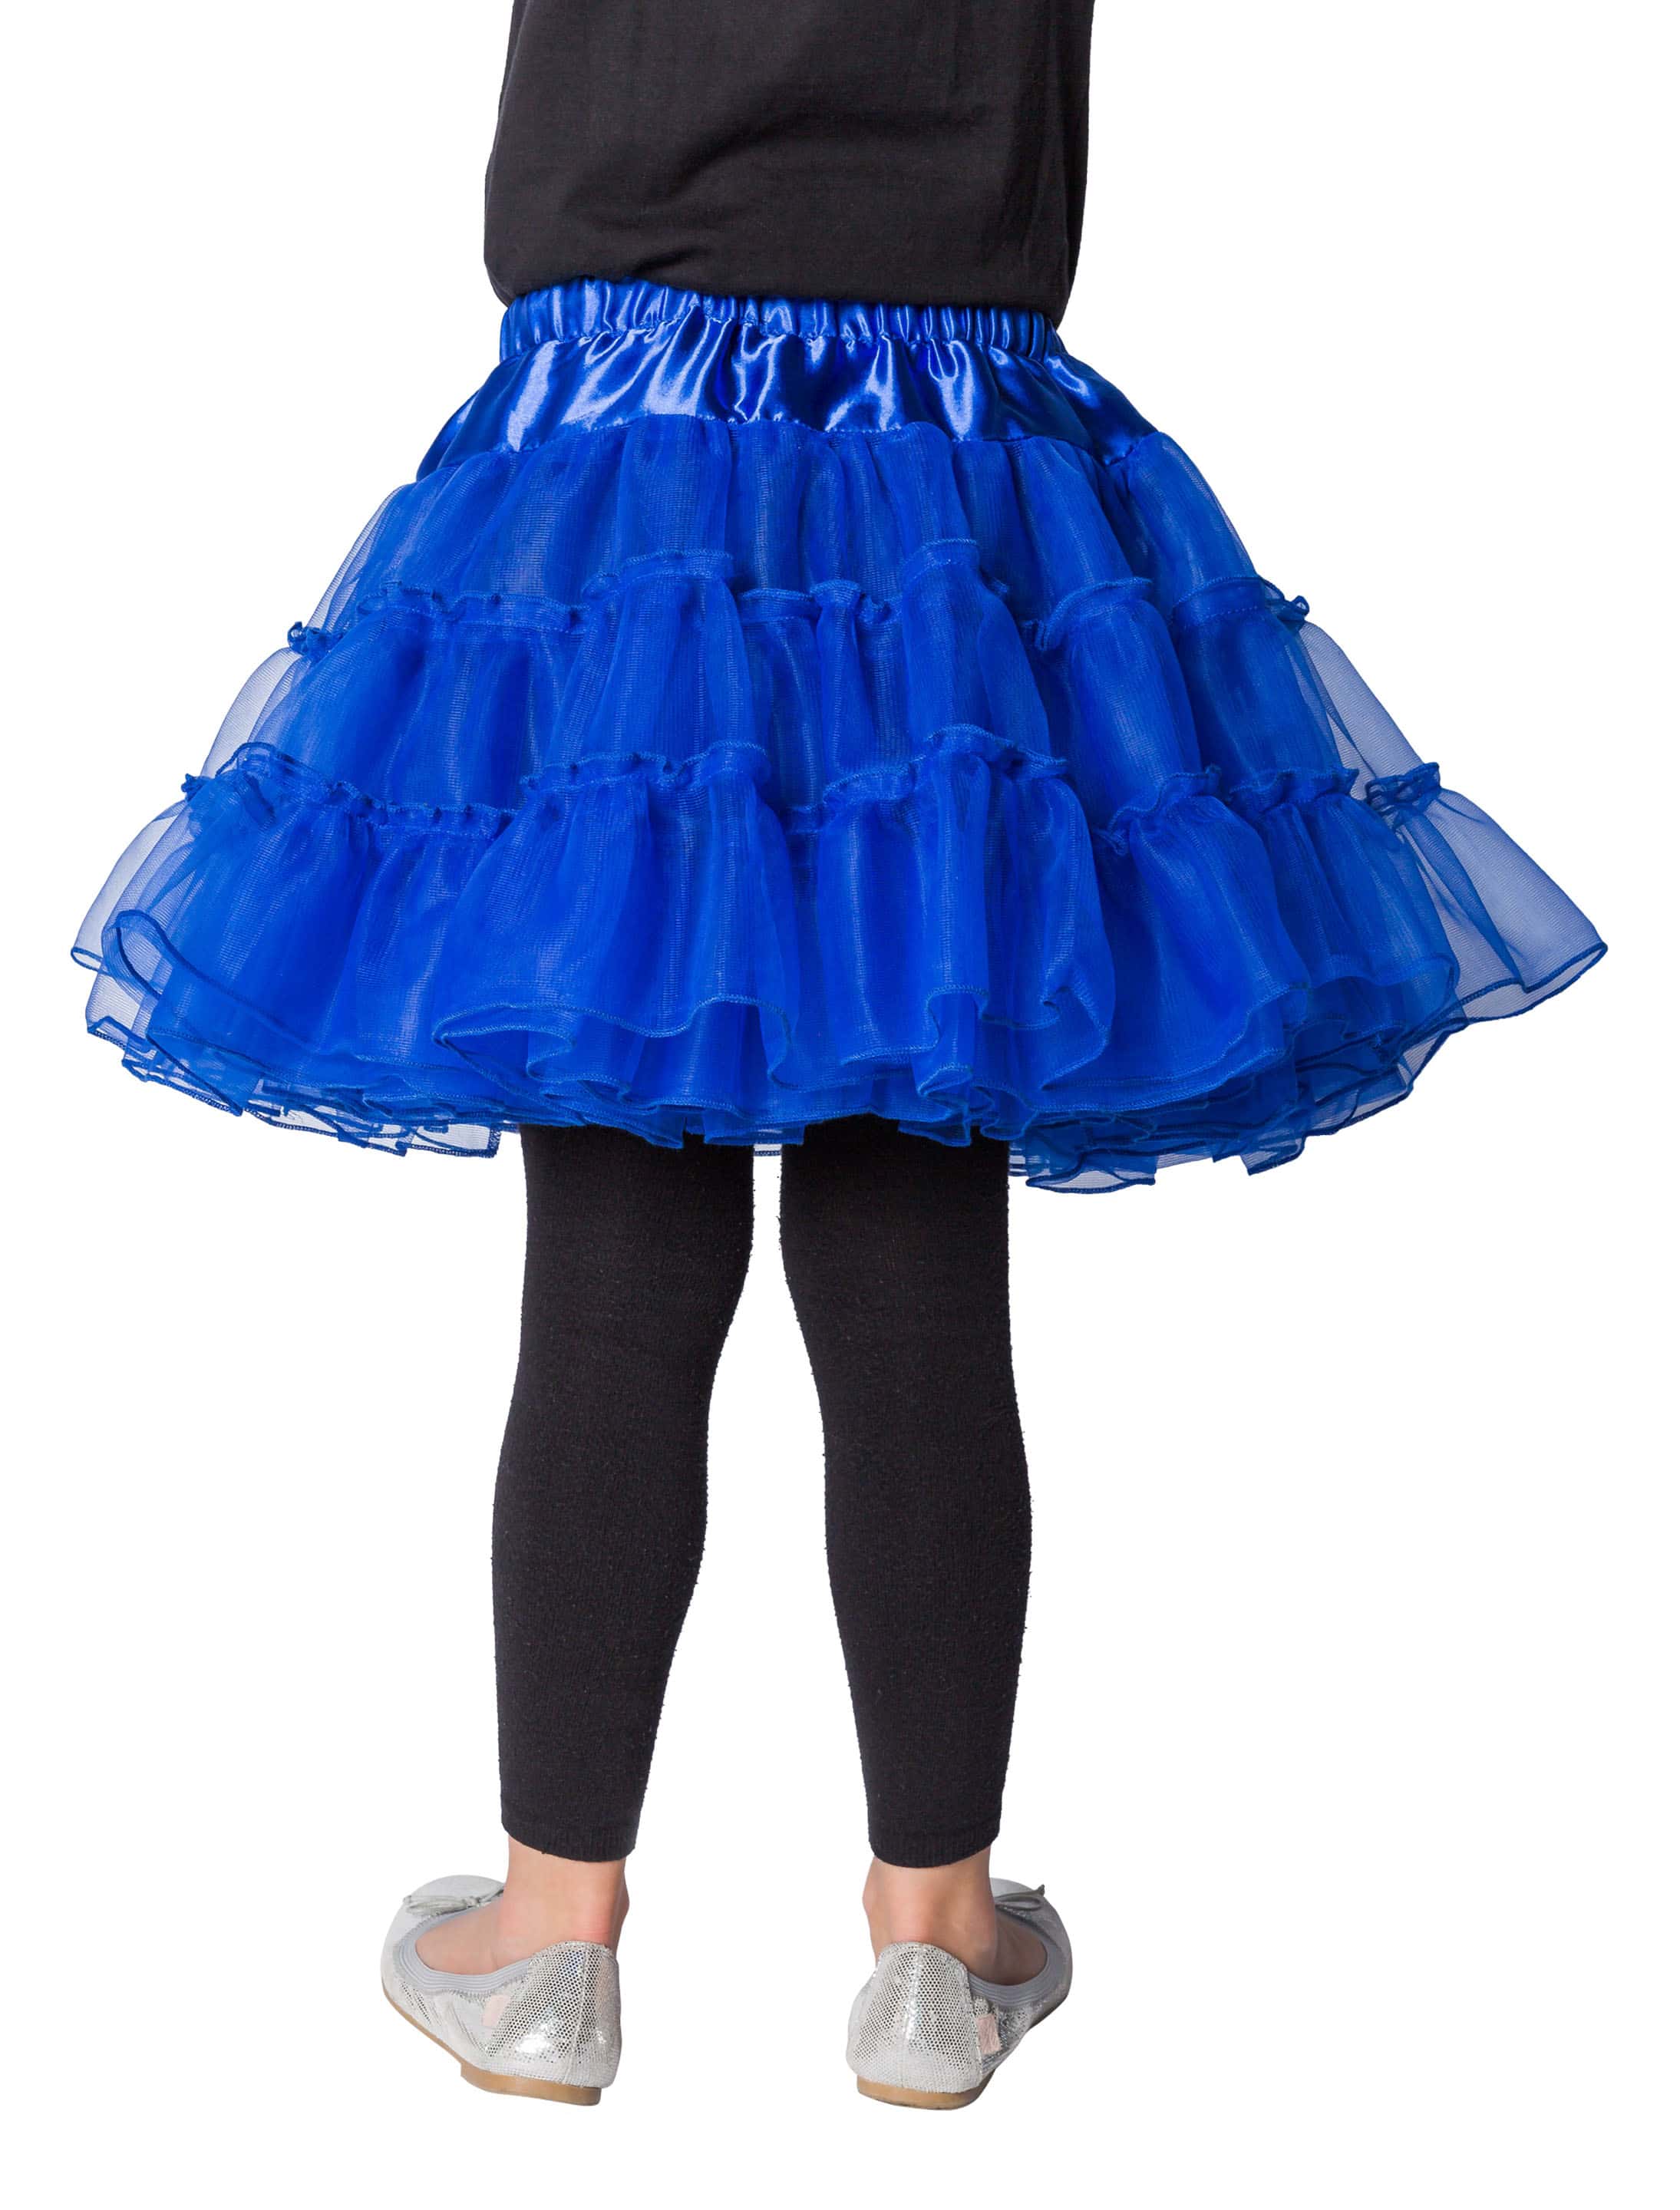 Petticoat Kinder Mädchen blau one size